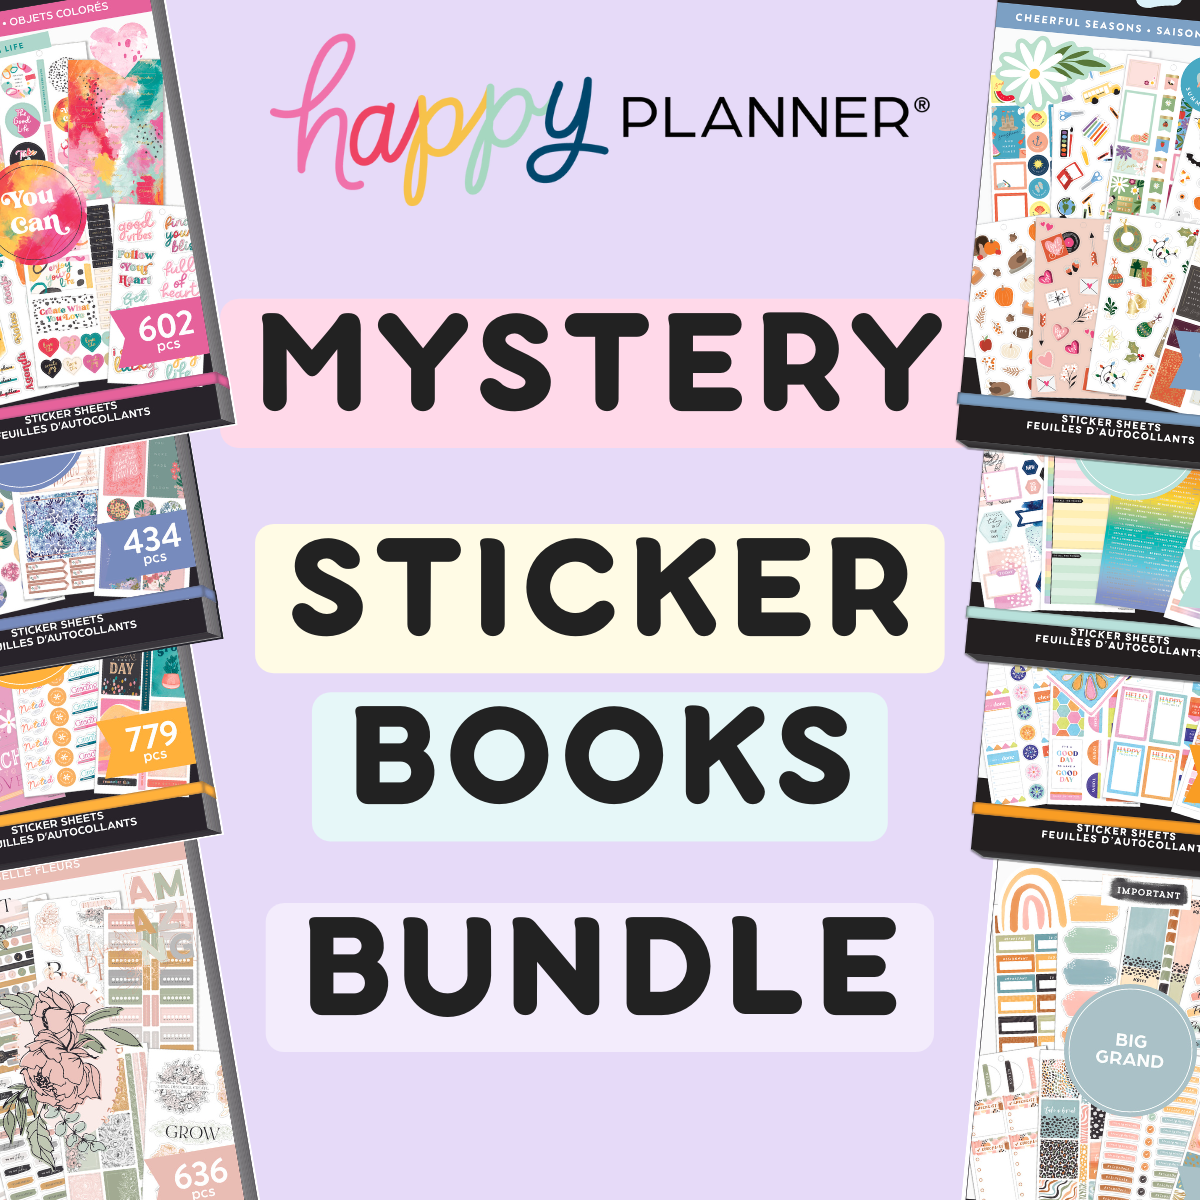 Happy Planner Mystery Sticker Book Bundle